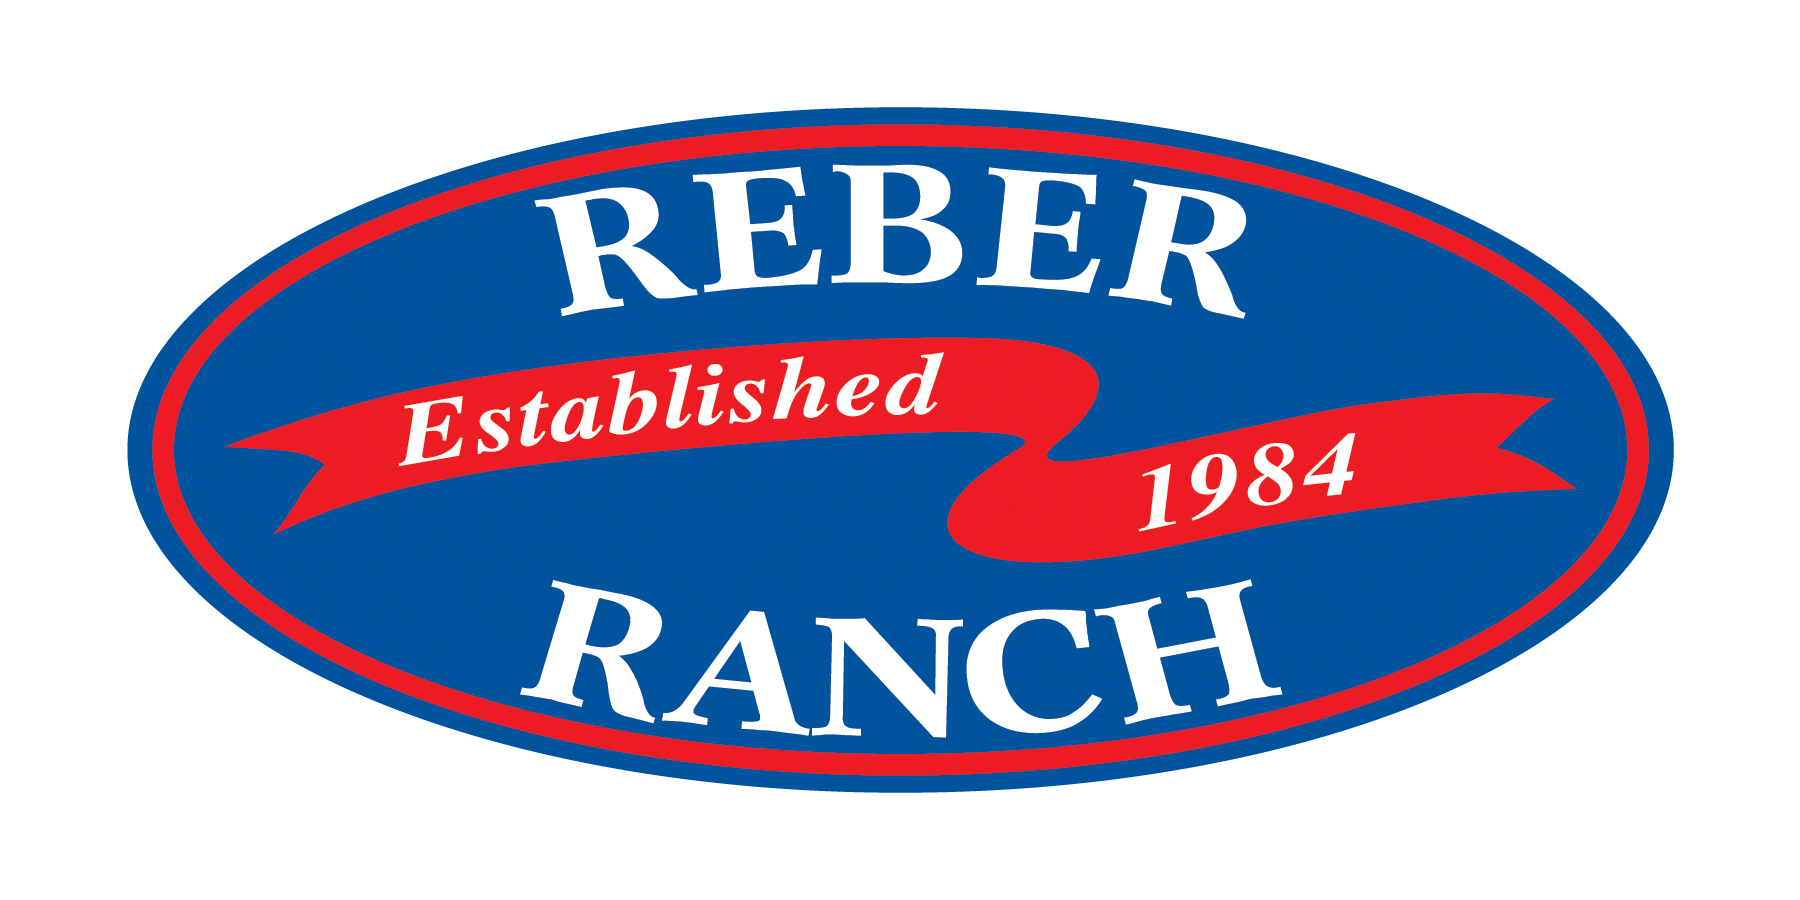 Reber ranch